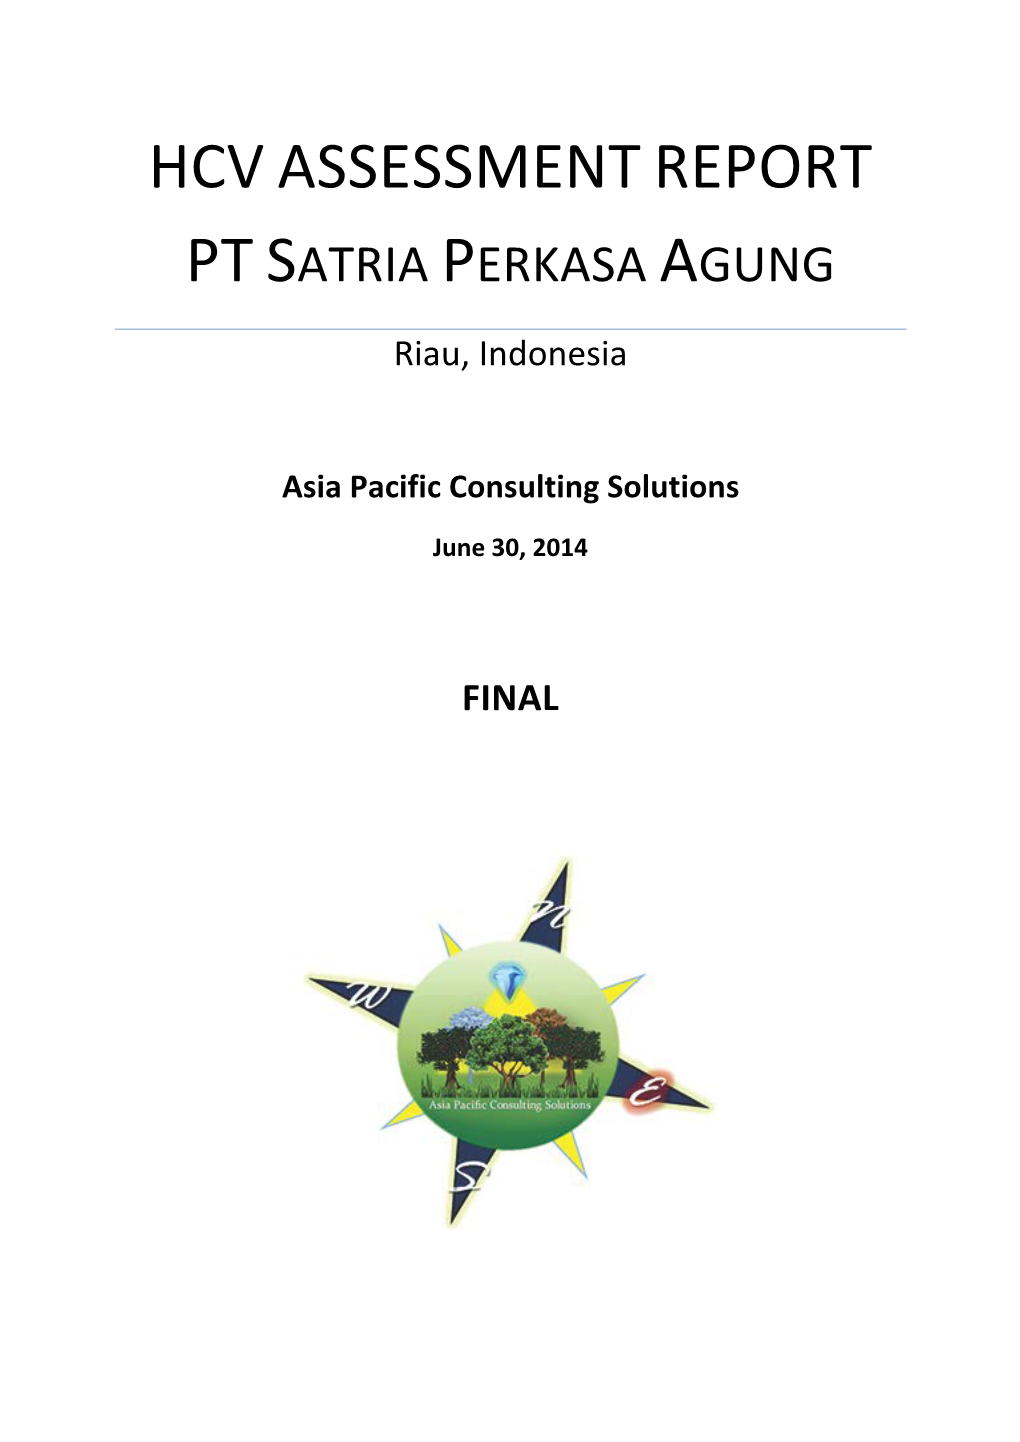 CV ASSESSMENT REPORT PT SATRIA PERKASA AGUNG Riau, Indonesia